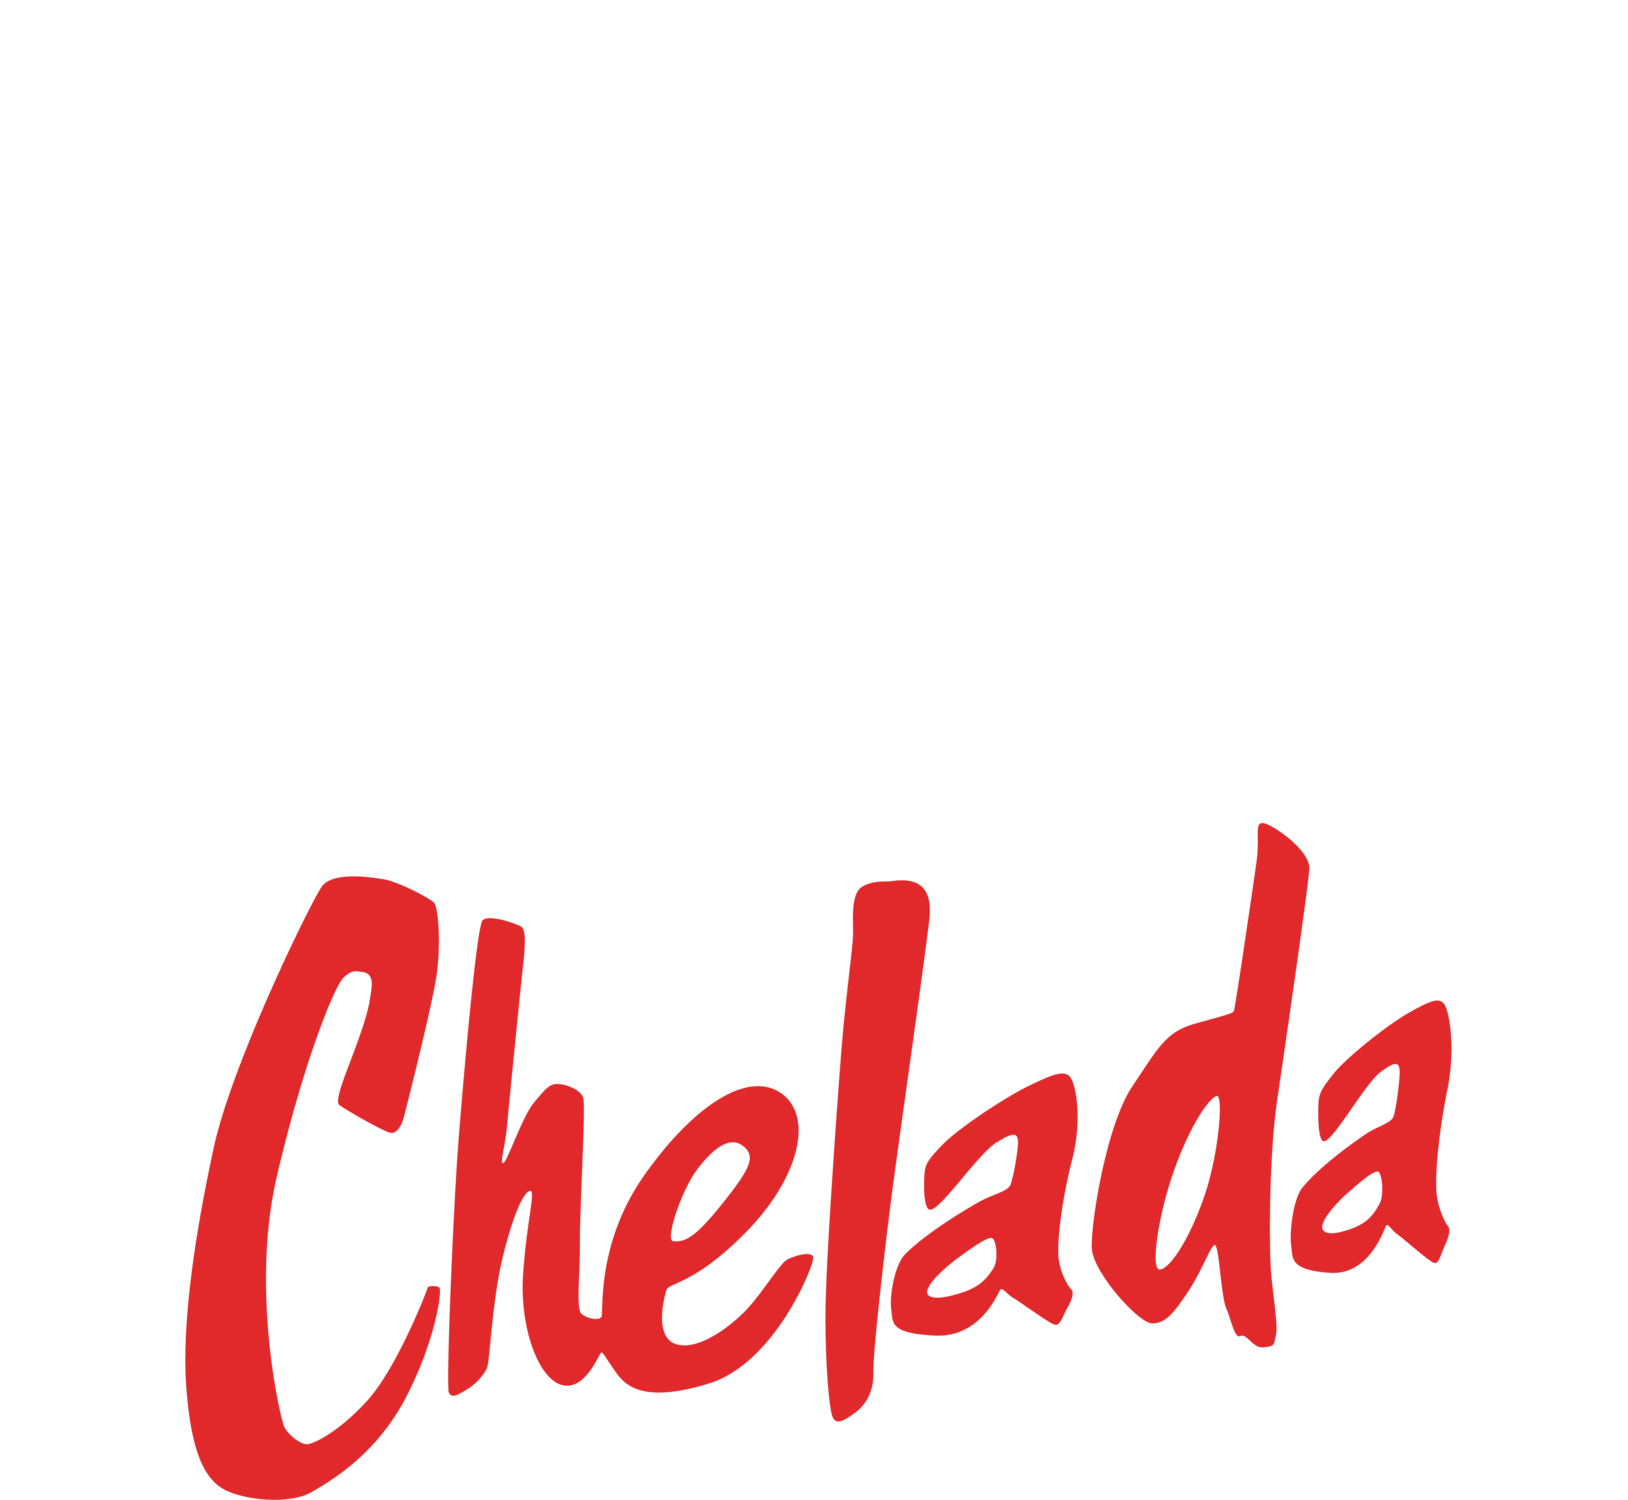 bud light chelada